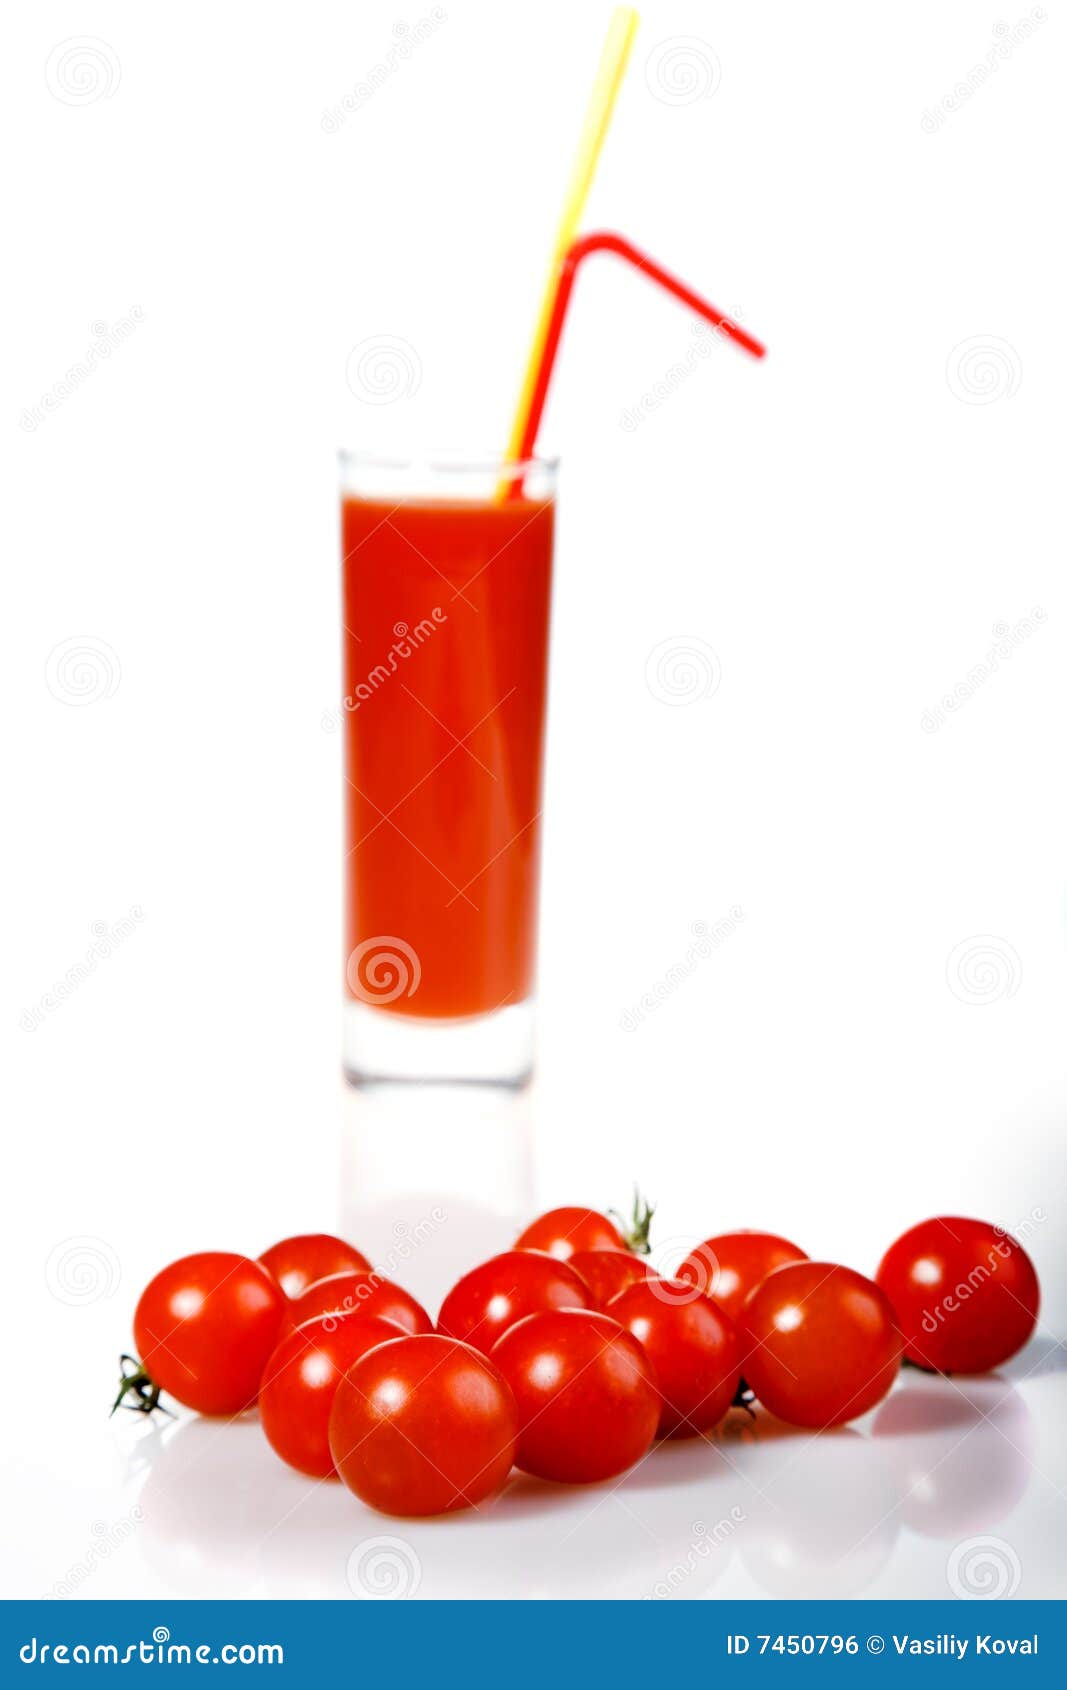 tomato juice clipart - photo #36